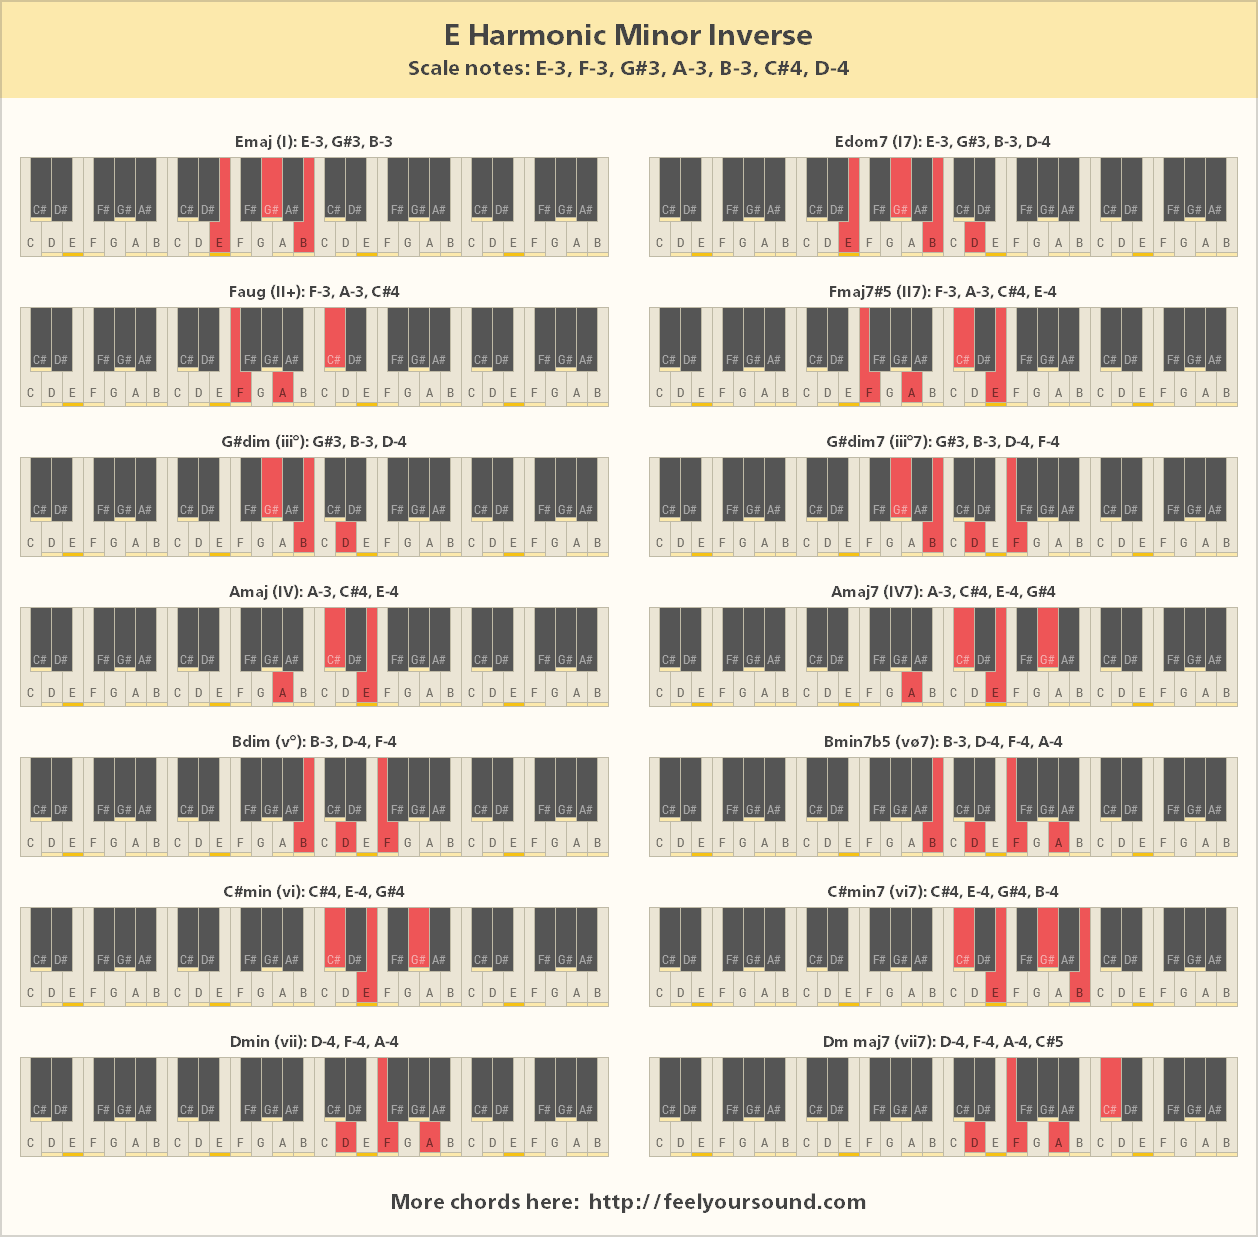 All important chords of E Harmonic Minor Inverse